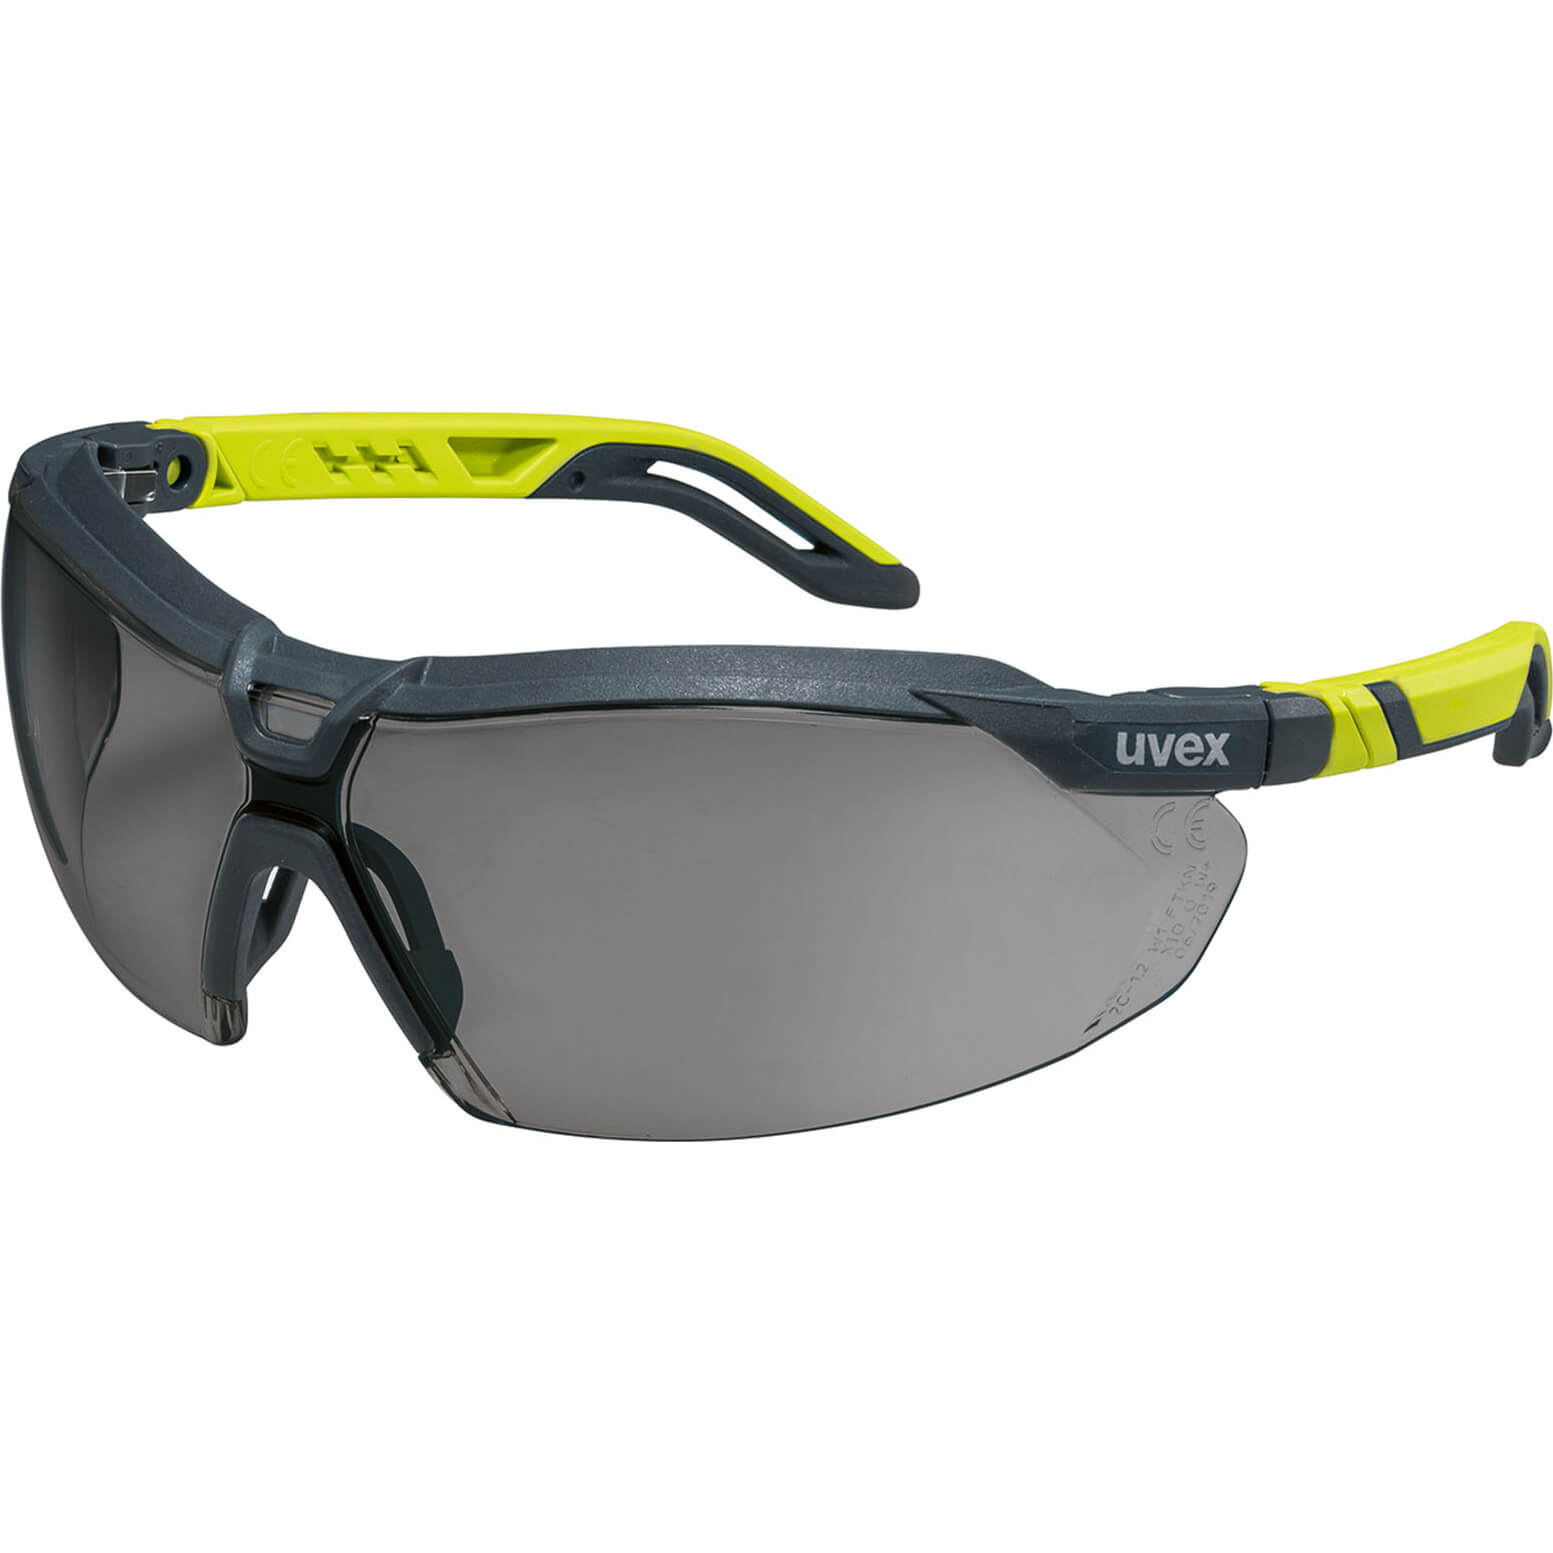 Uvex I-5 Sunglare Filter Safety Glasses Anthracite Grey